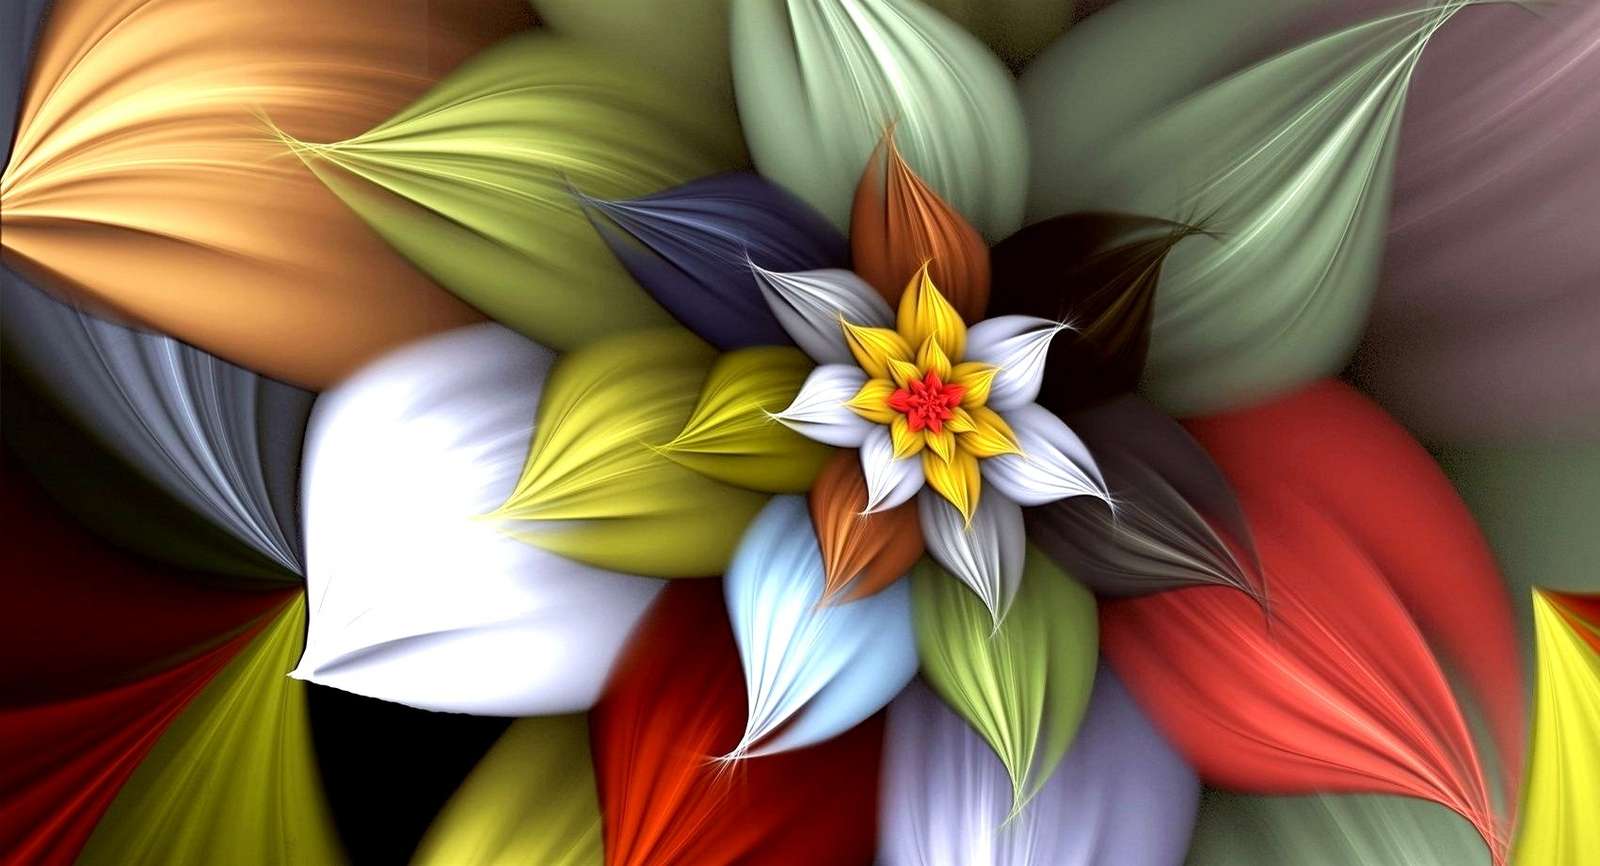 Abstractie-flower online puzzel